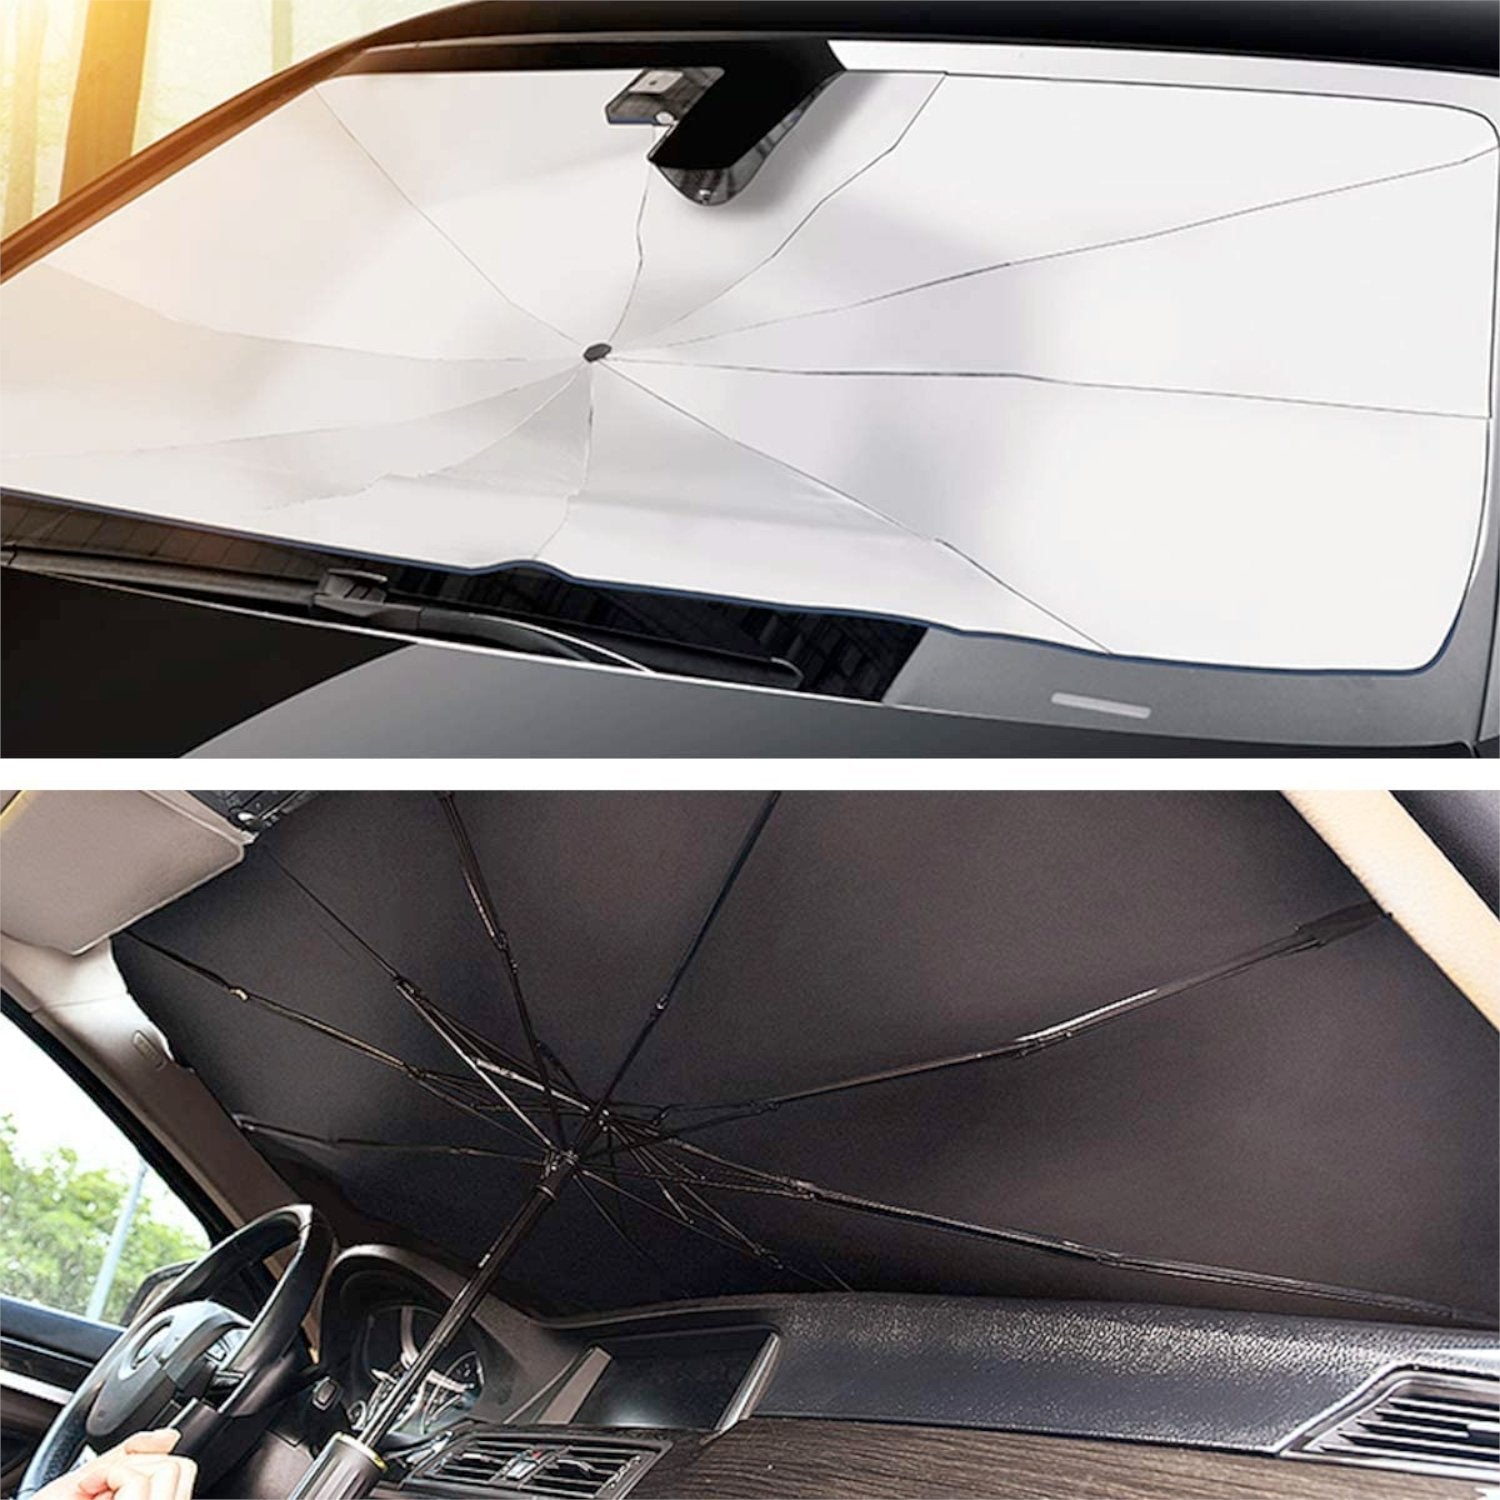 SunProtect Umbrella™ | Auto Sunshade Protector